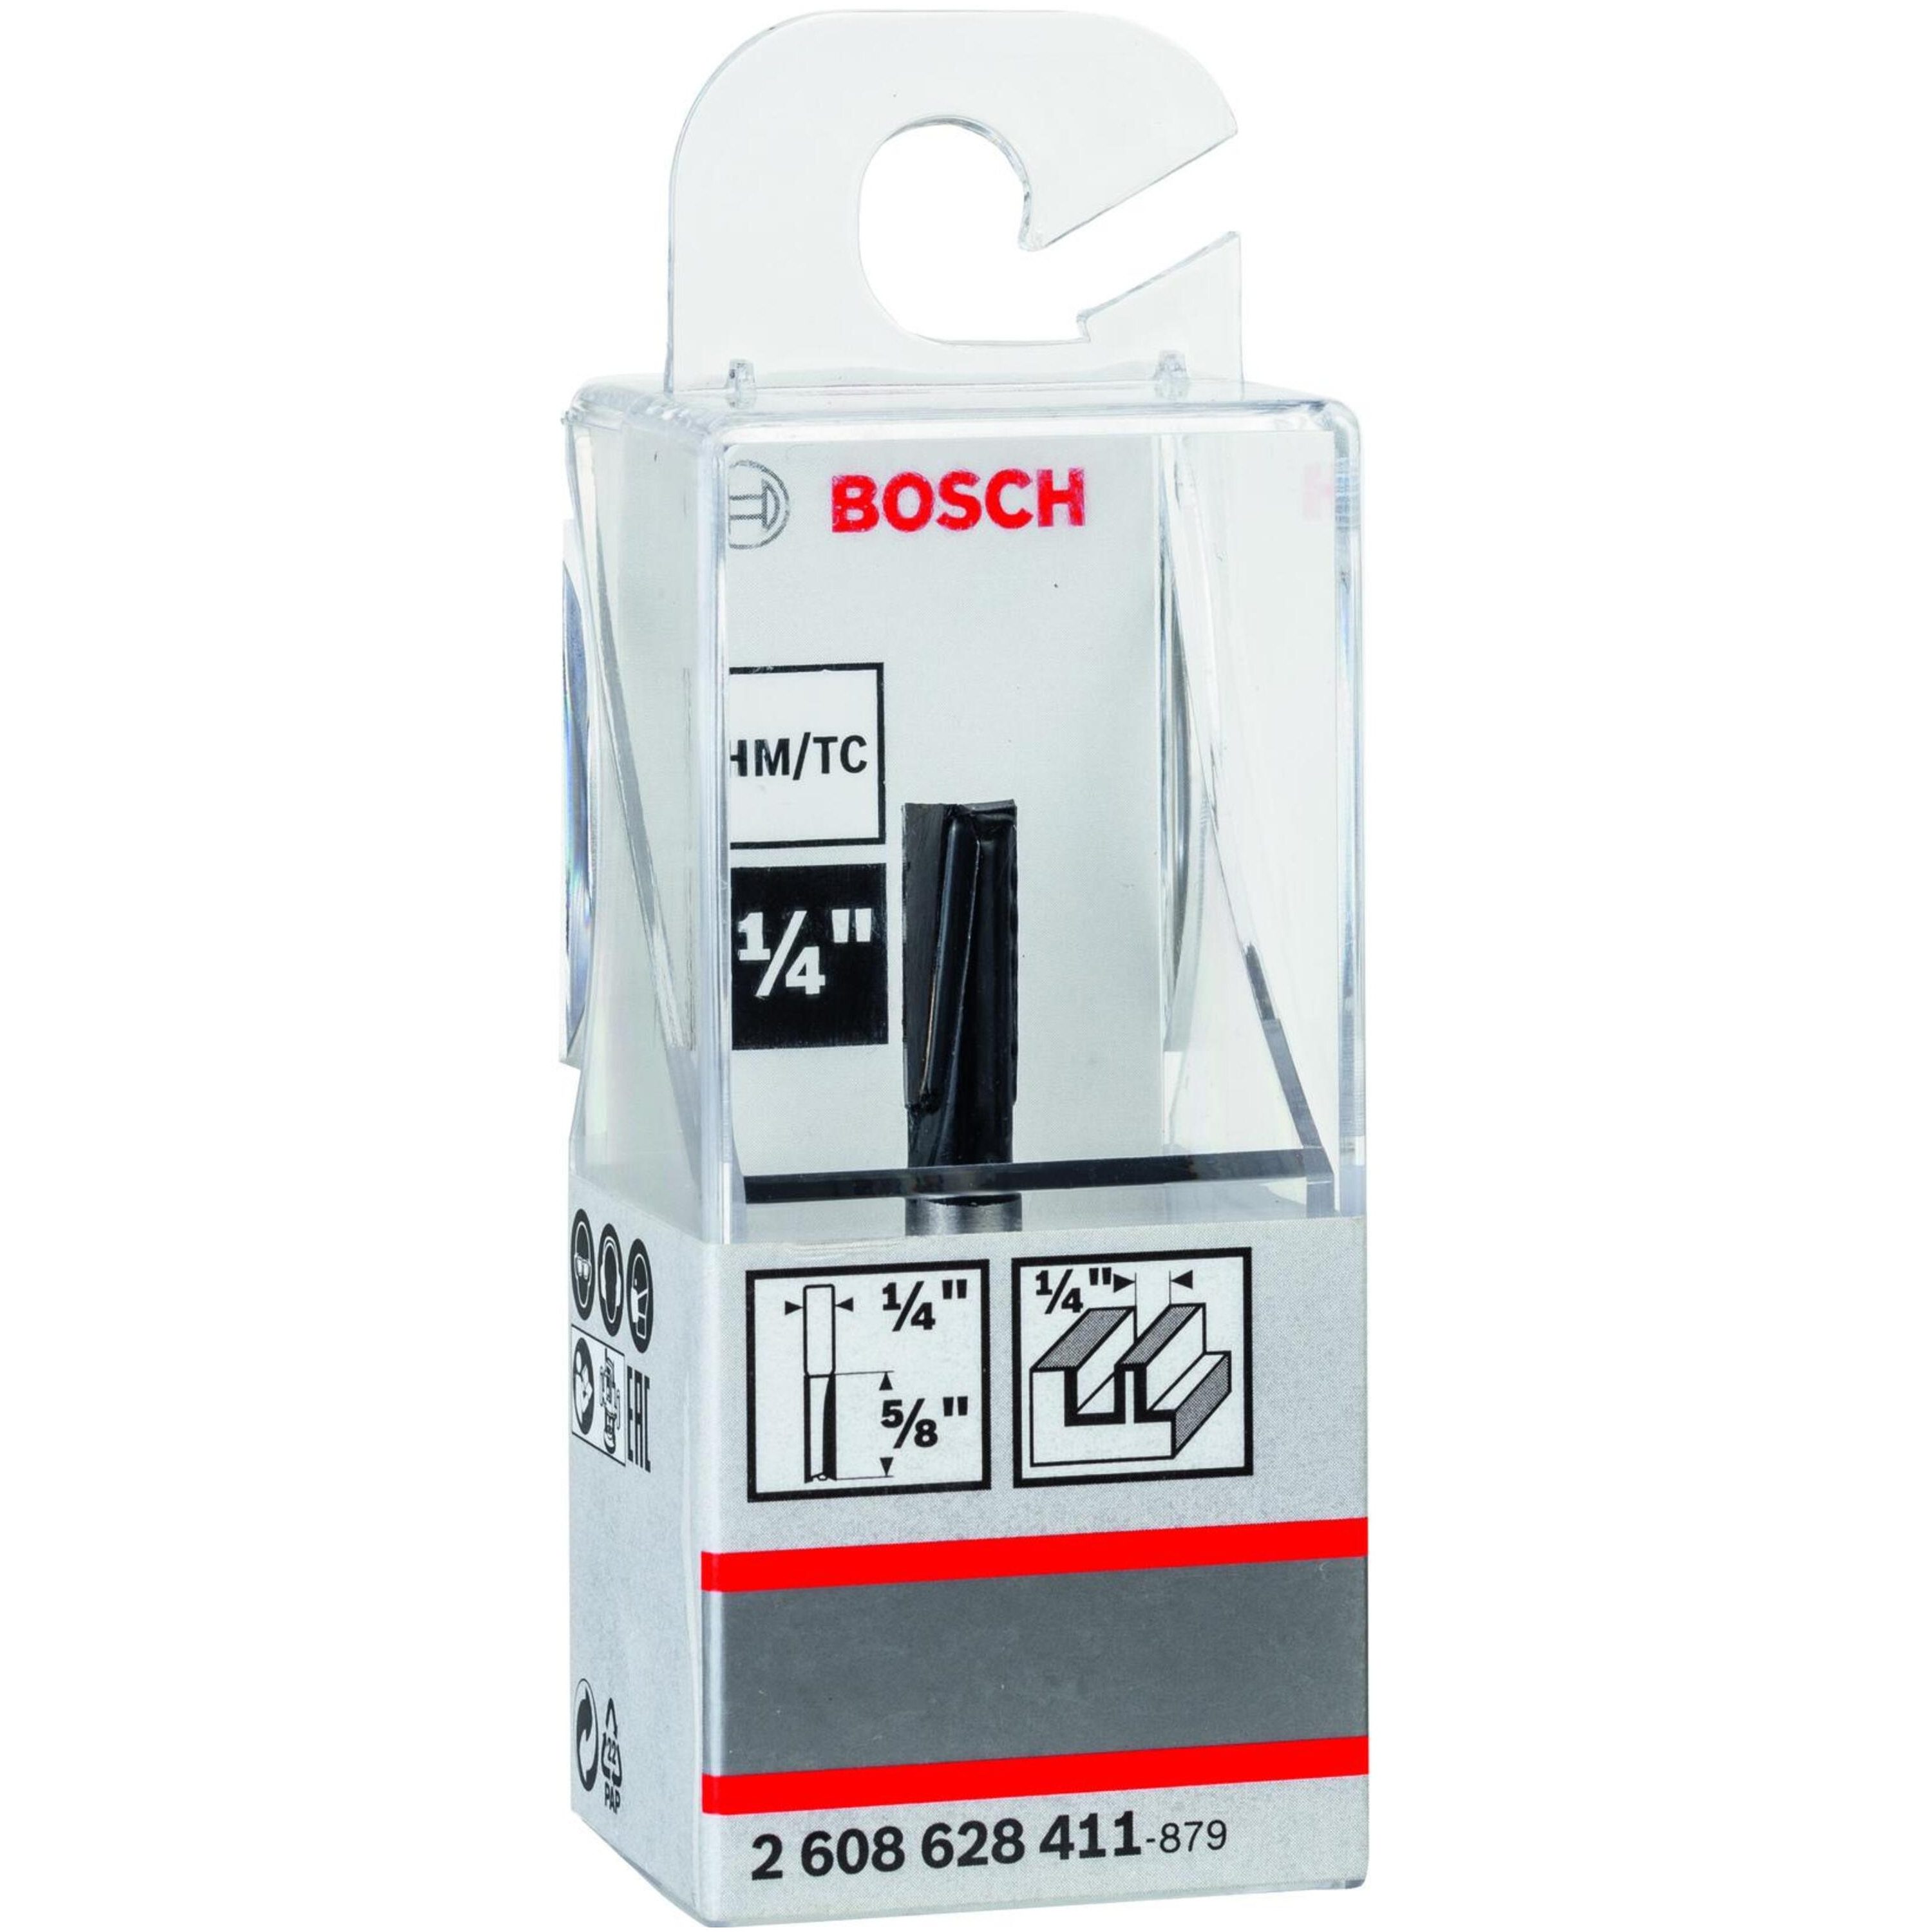 Bosch Straight bit, 1/4", D1 6.35 mm, L 16 mm, G 48 mm 2608628411 Power Tool Services